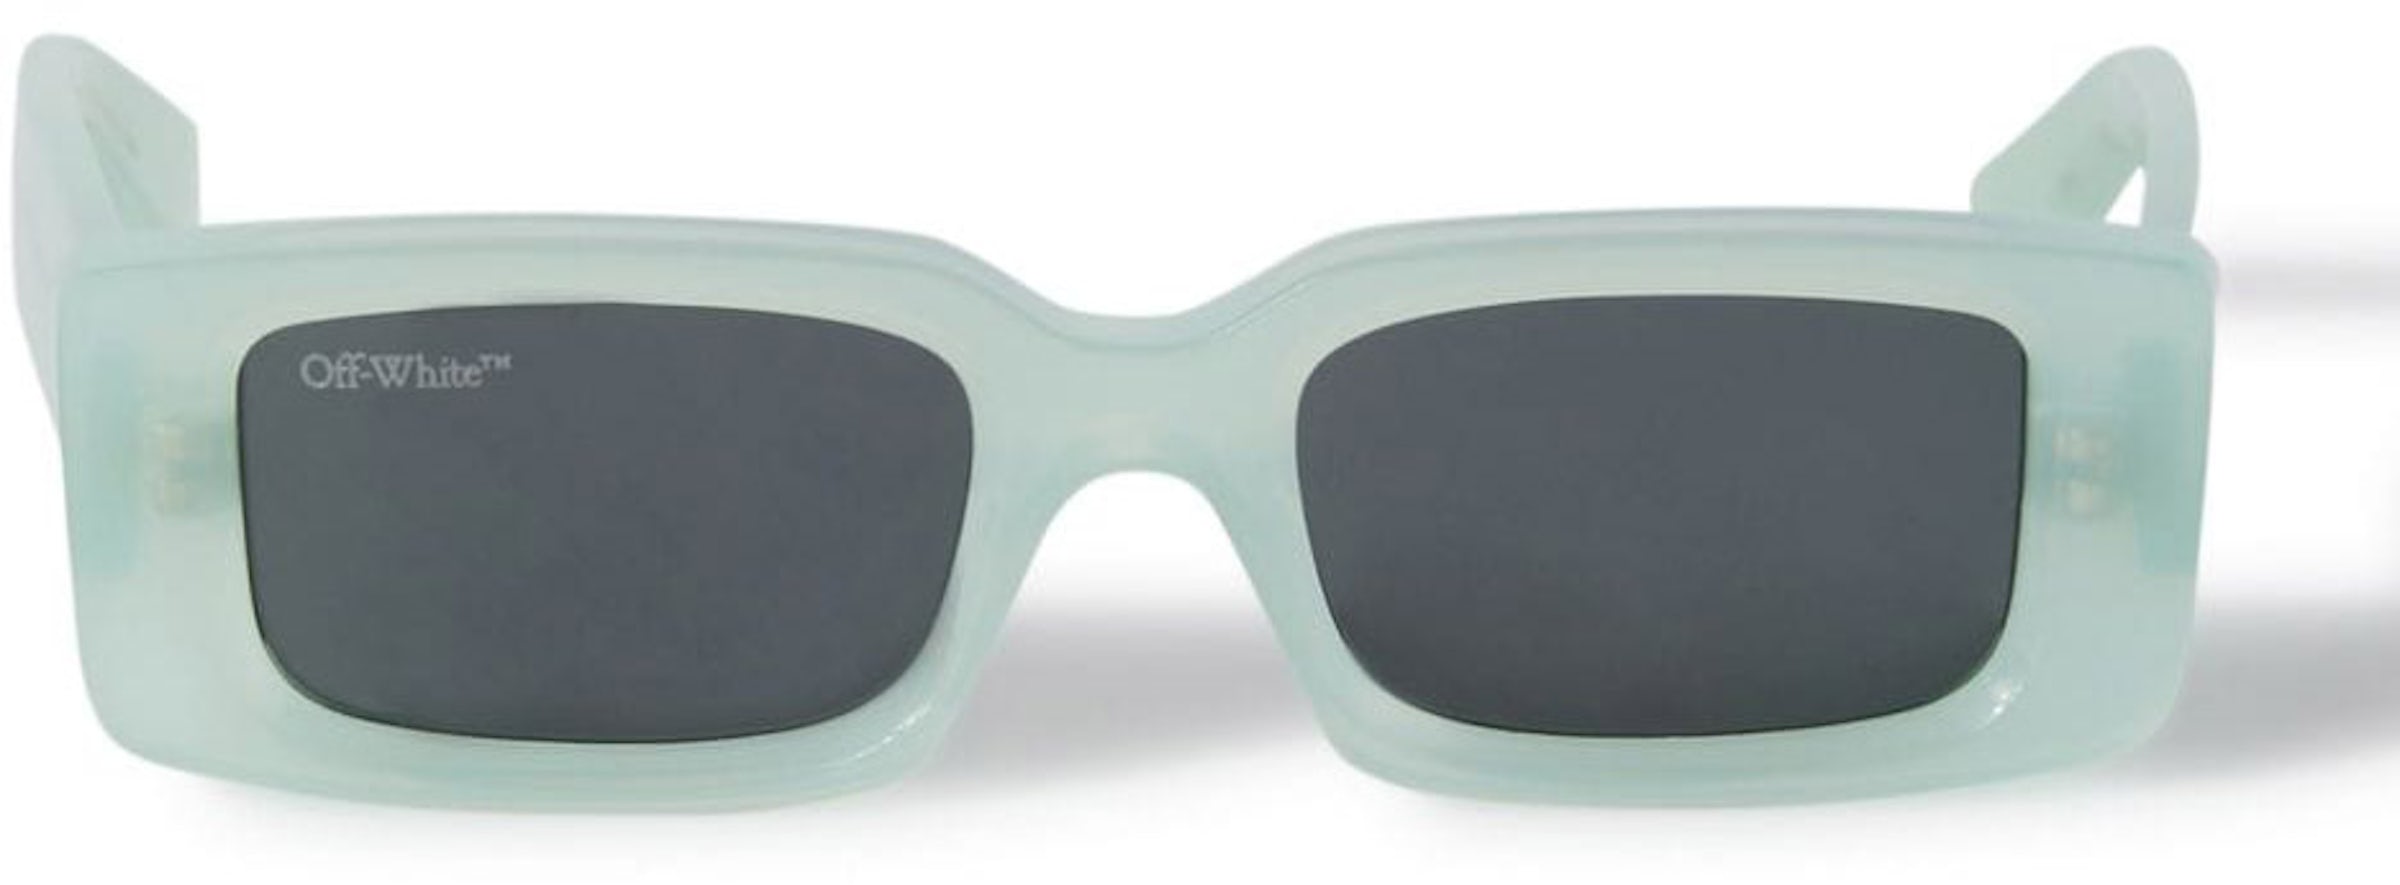 OFF-WHITE Virgil Square Frame Sunglasses Black/White/Grey  (OMRI012R21PLA0011001) Men's - US